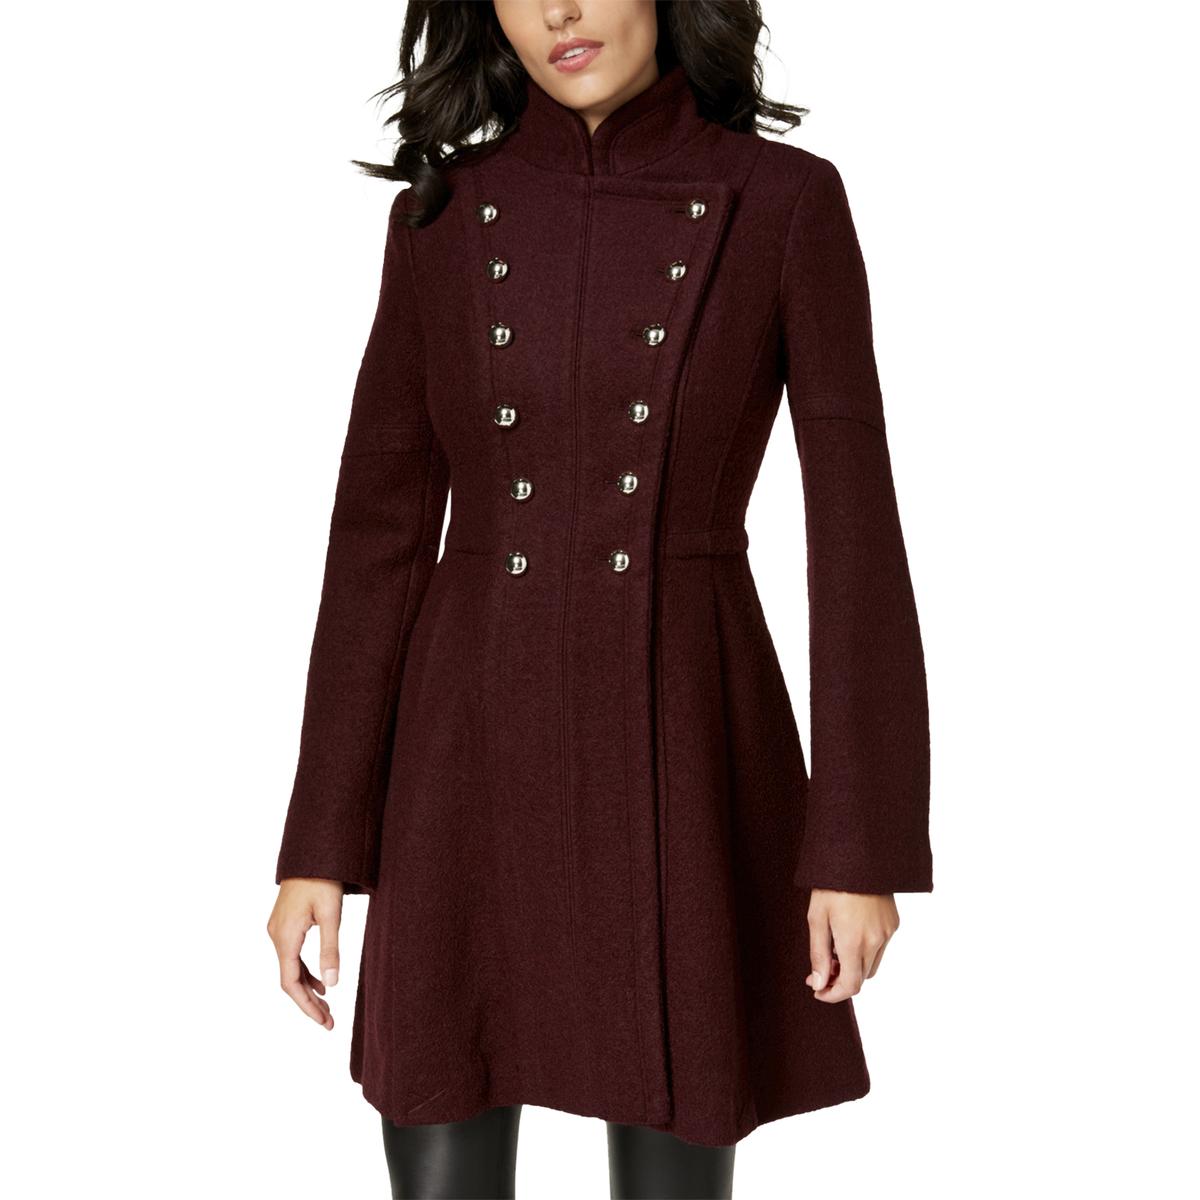 Guess Womens Red Wool Blend Long Dressy Coat Outerwear S BHFO 6157 | eBay